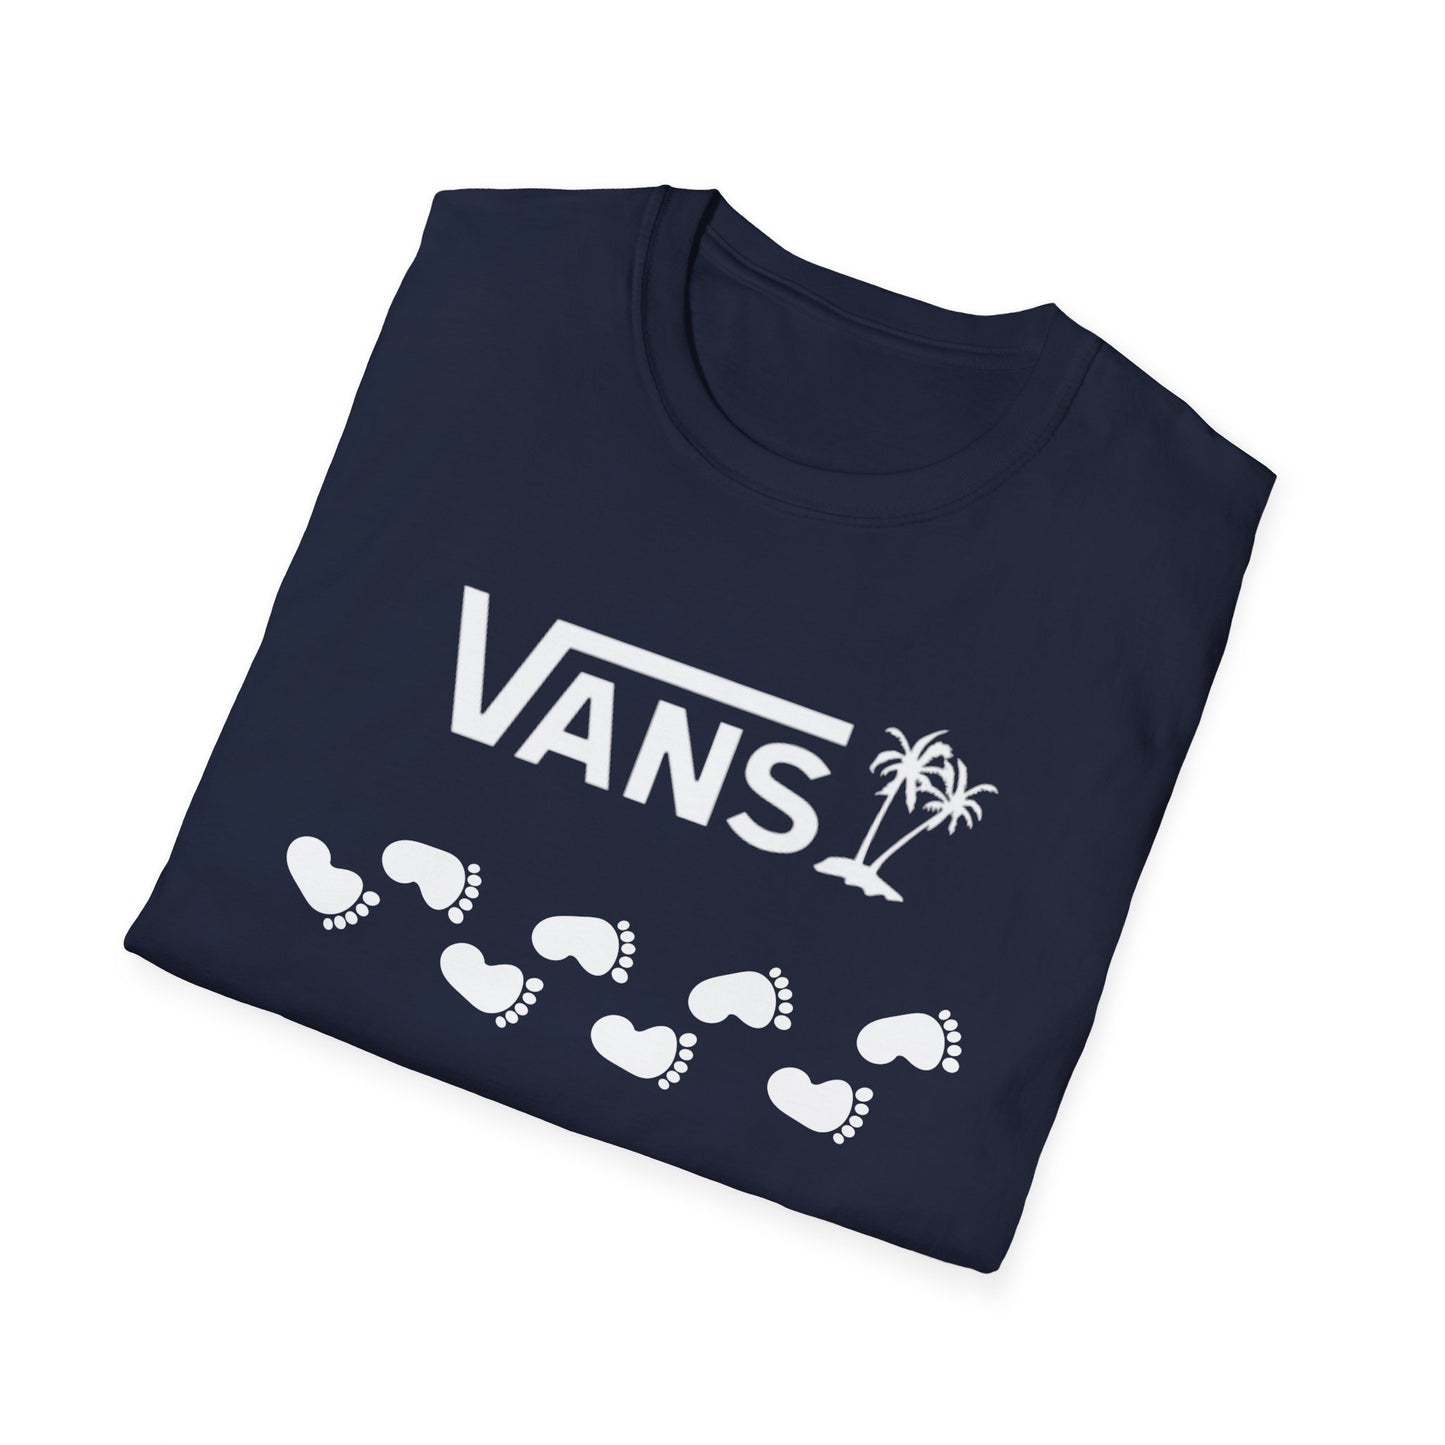 Van's Original's Bare Feet - Unisex Softstyle T-Shirt